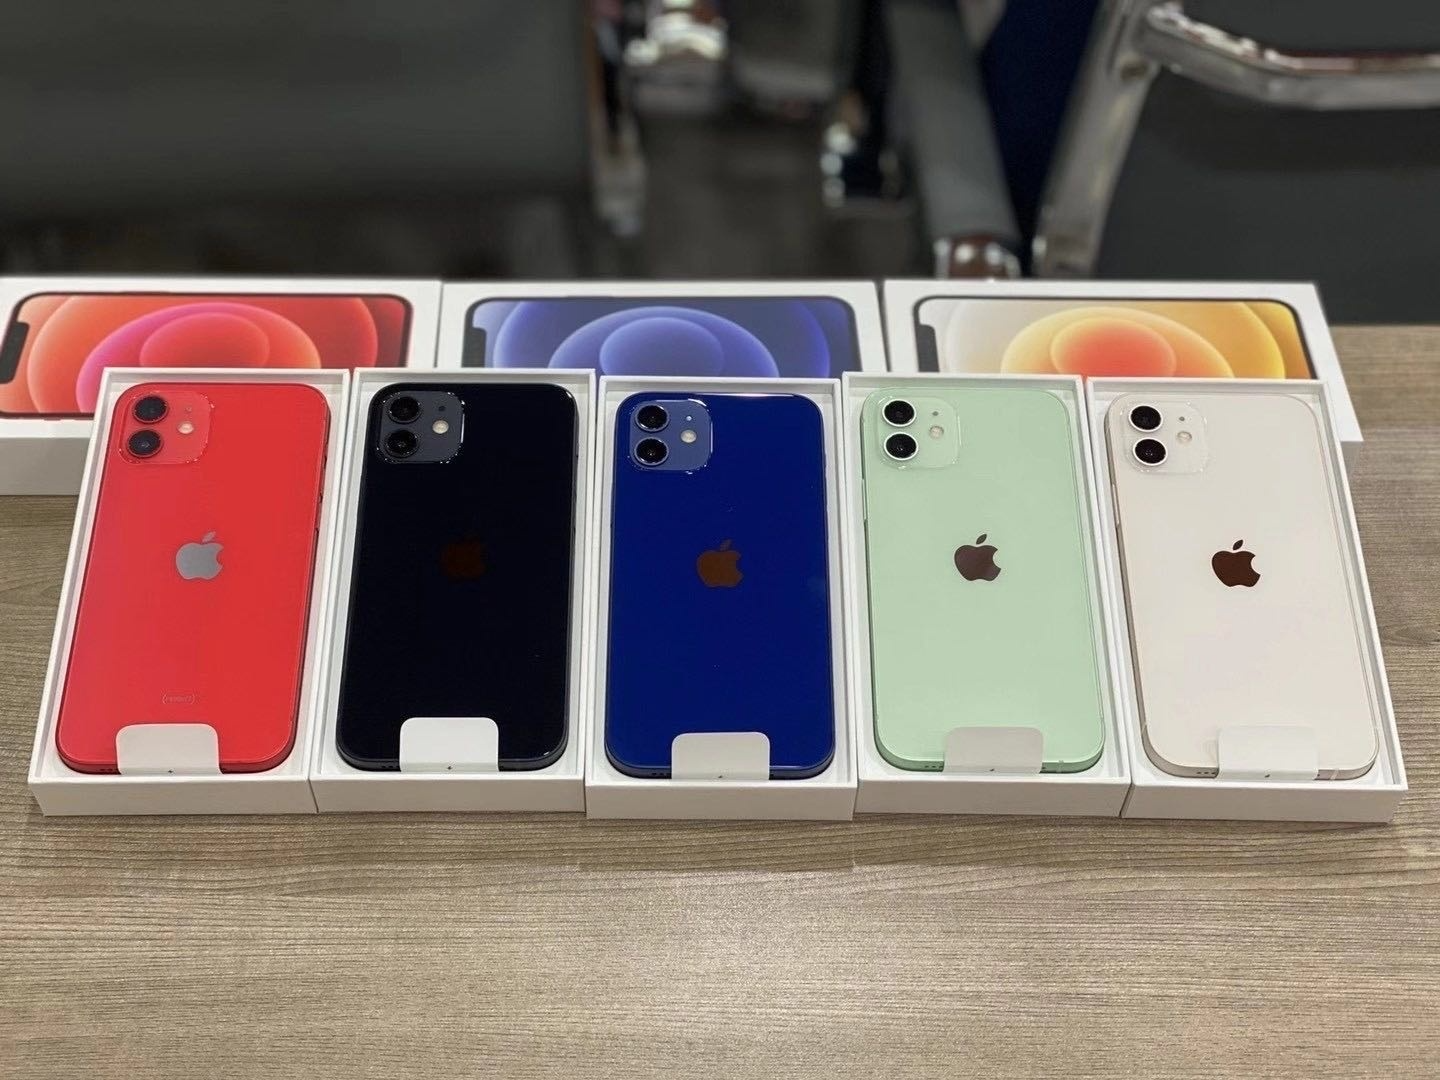 Iphone 12 россии. Apple iphone 12 Pro Max цвета. Iphone 12 Mini Colors. Iphone 12 Mini и iphone 12. Iphone 12 Mini цвета корпуса.